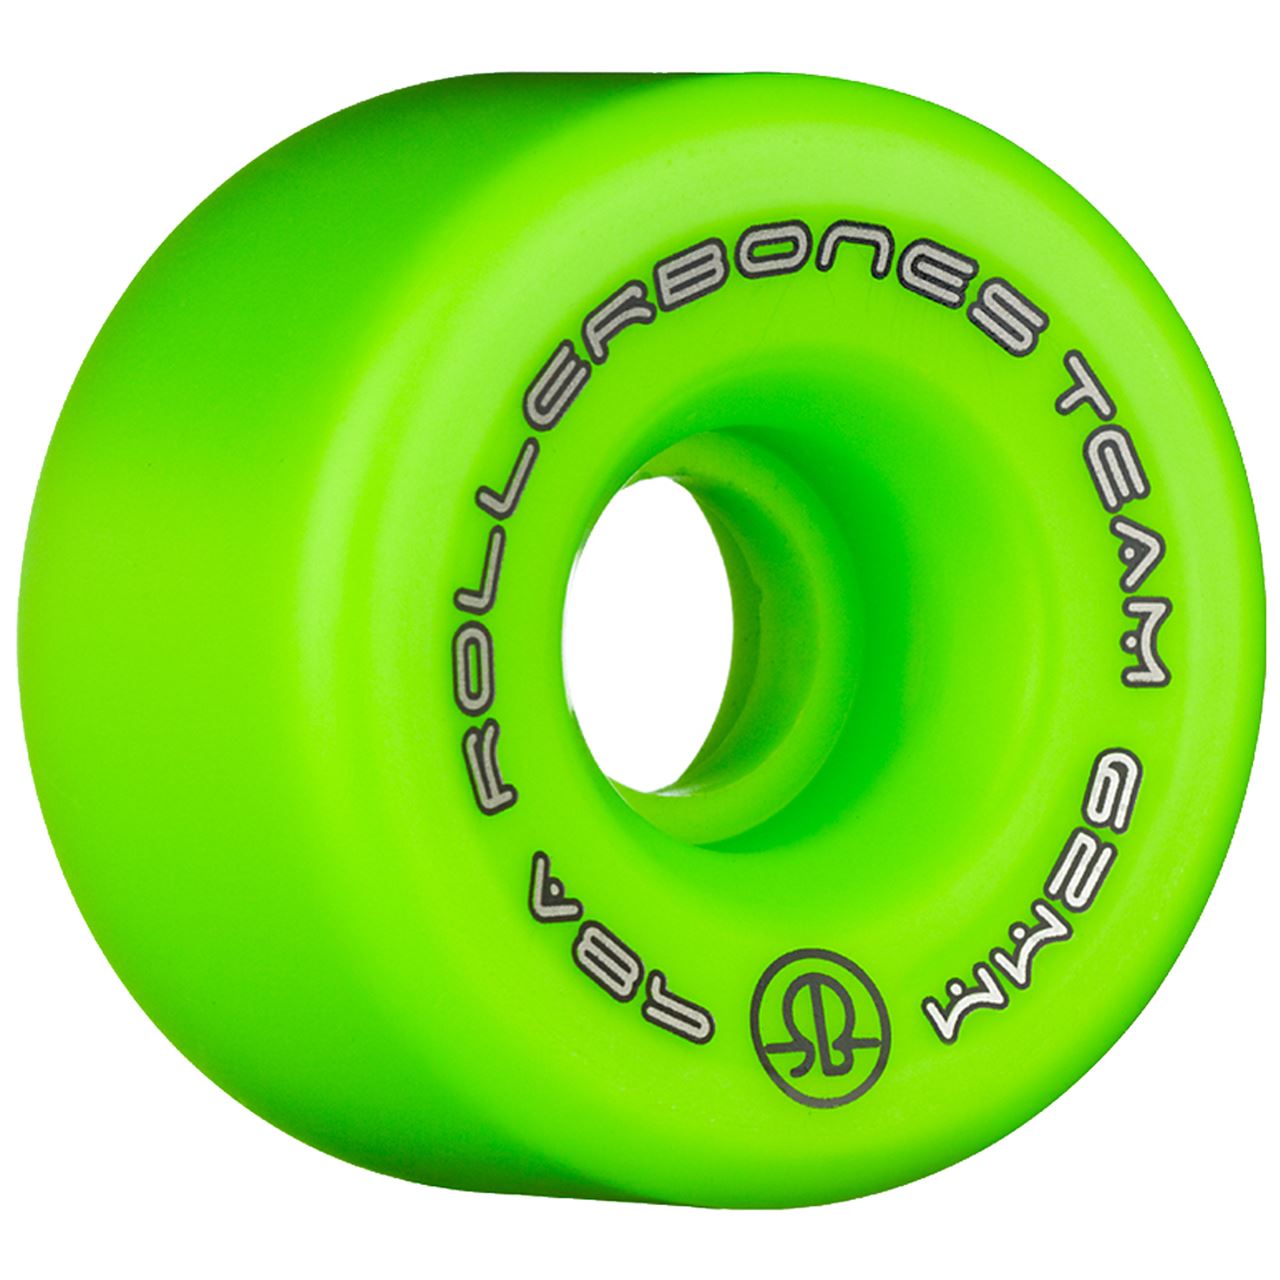 Rollerbones Team Logo Wheels Green 62mm 98a - Set of 8